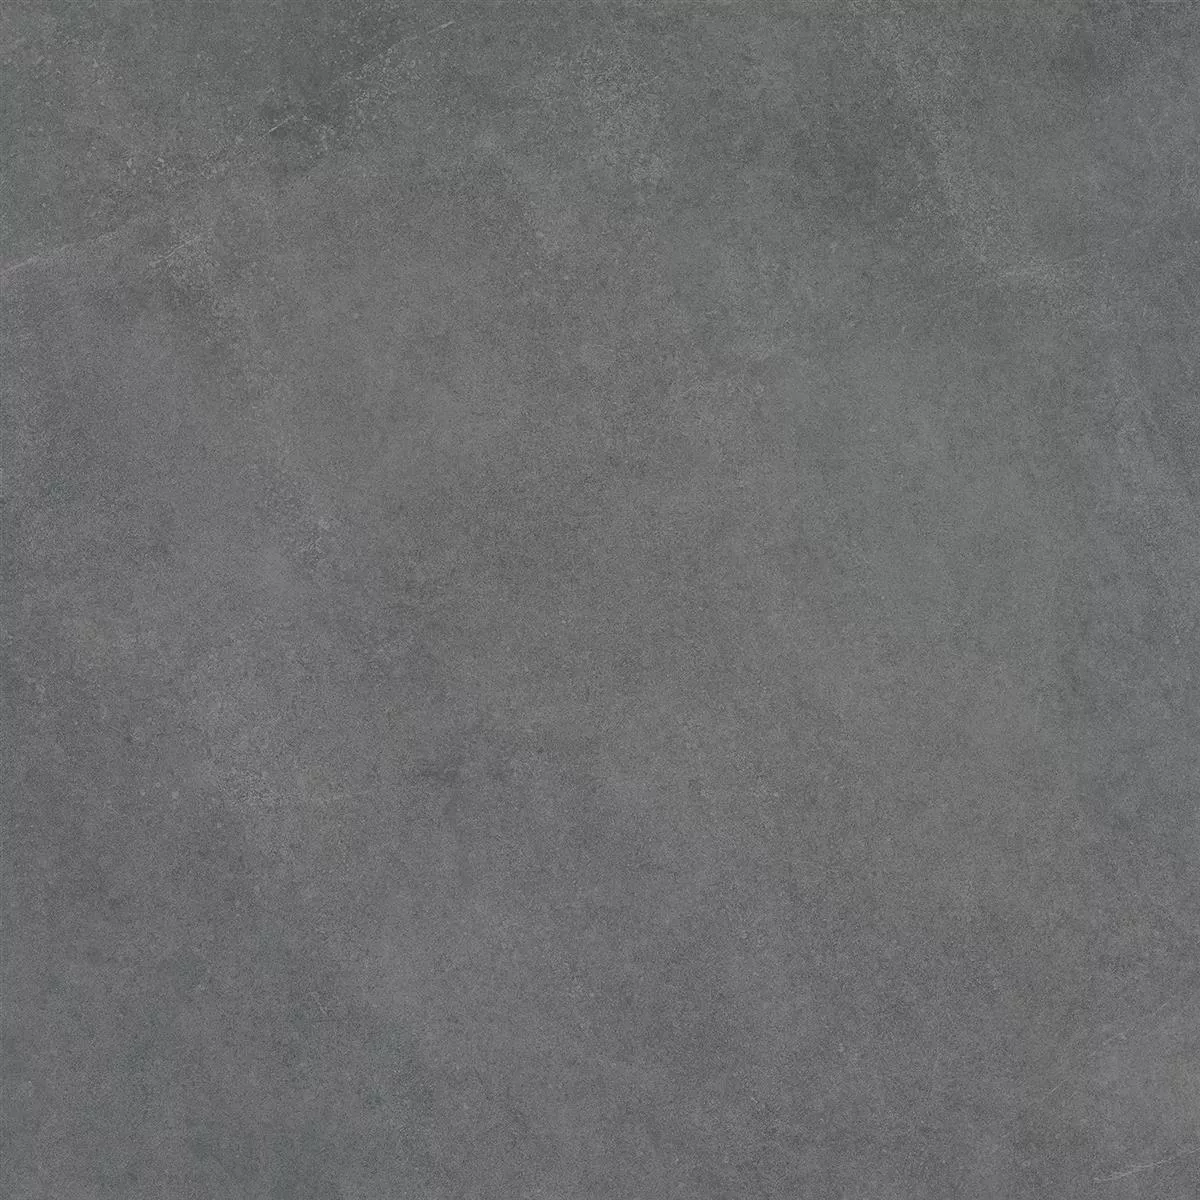 Vzorek Terasové Desky Cementový Vzhled Glinde Antracitová 60x60cm